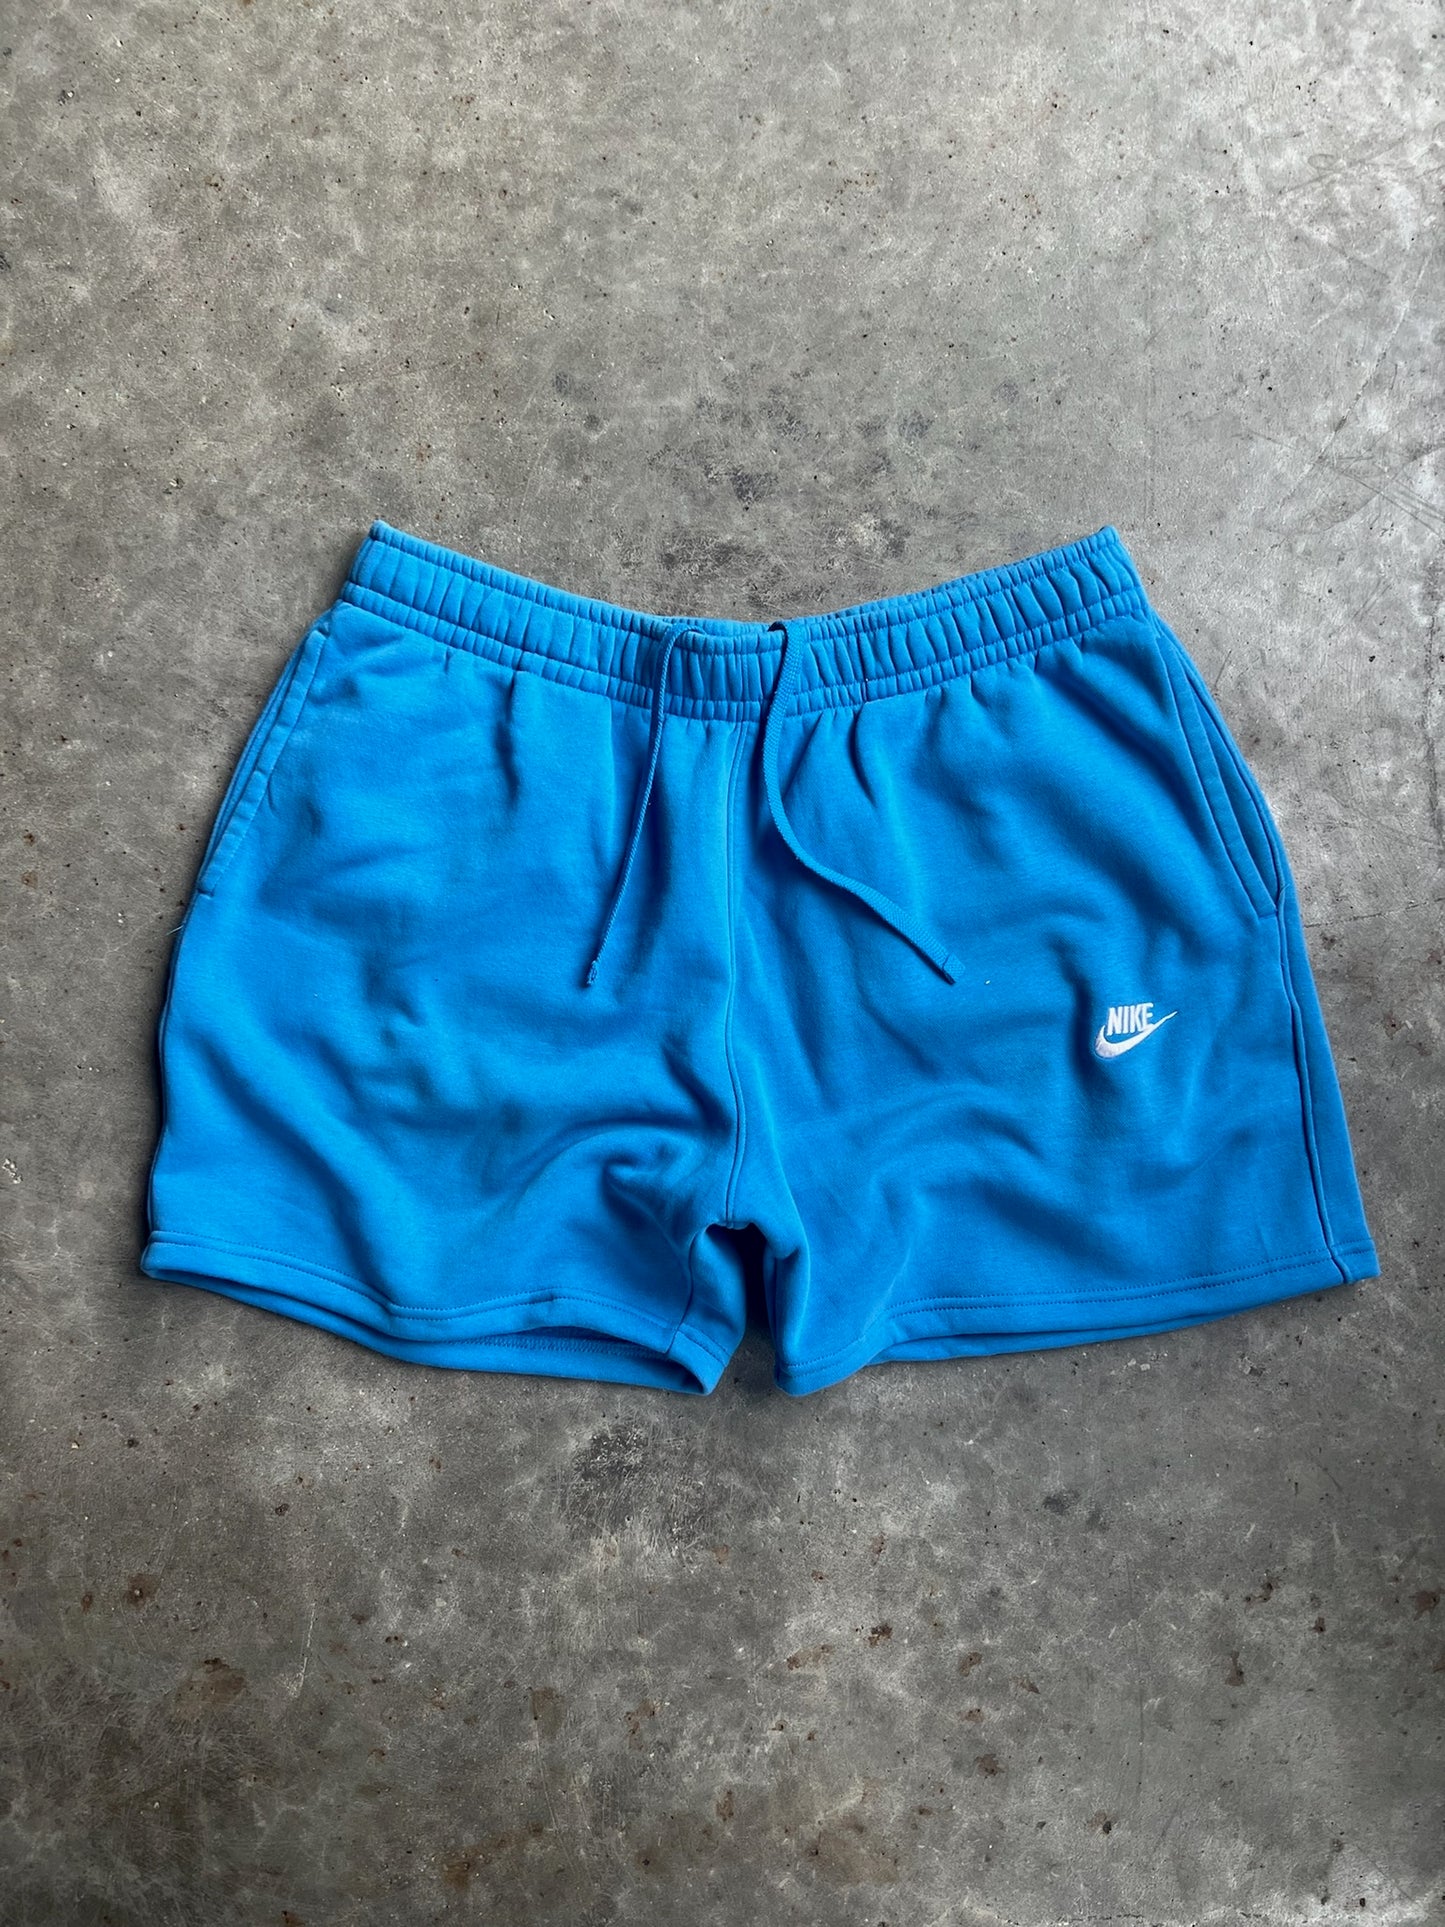 Reworked Blue Nike Shorts - XL